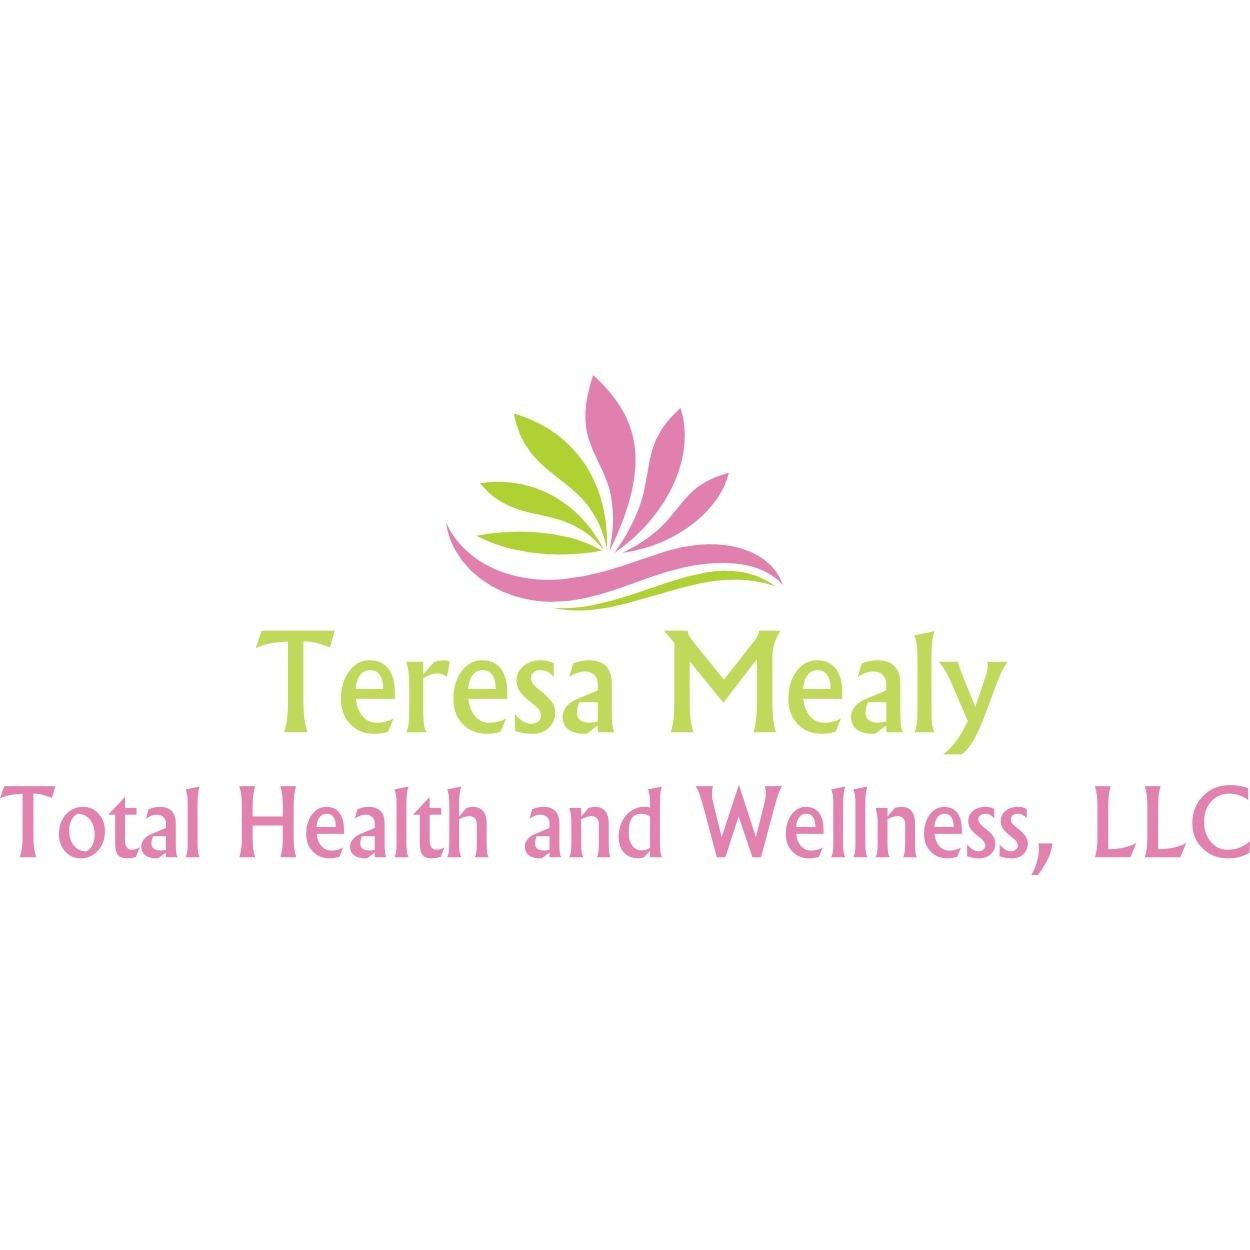 Teresa Mealy Total Health and Wellness, LLC Photo